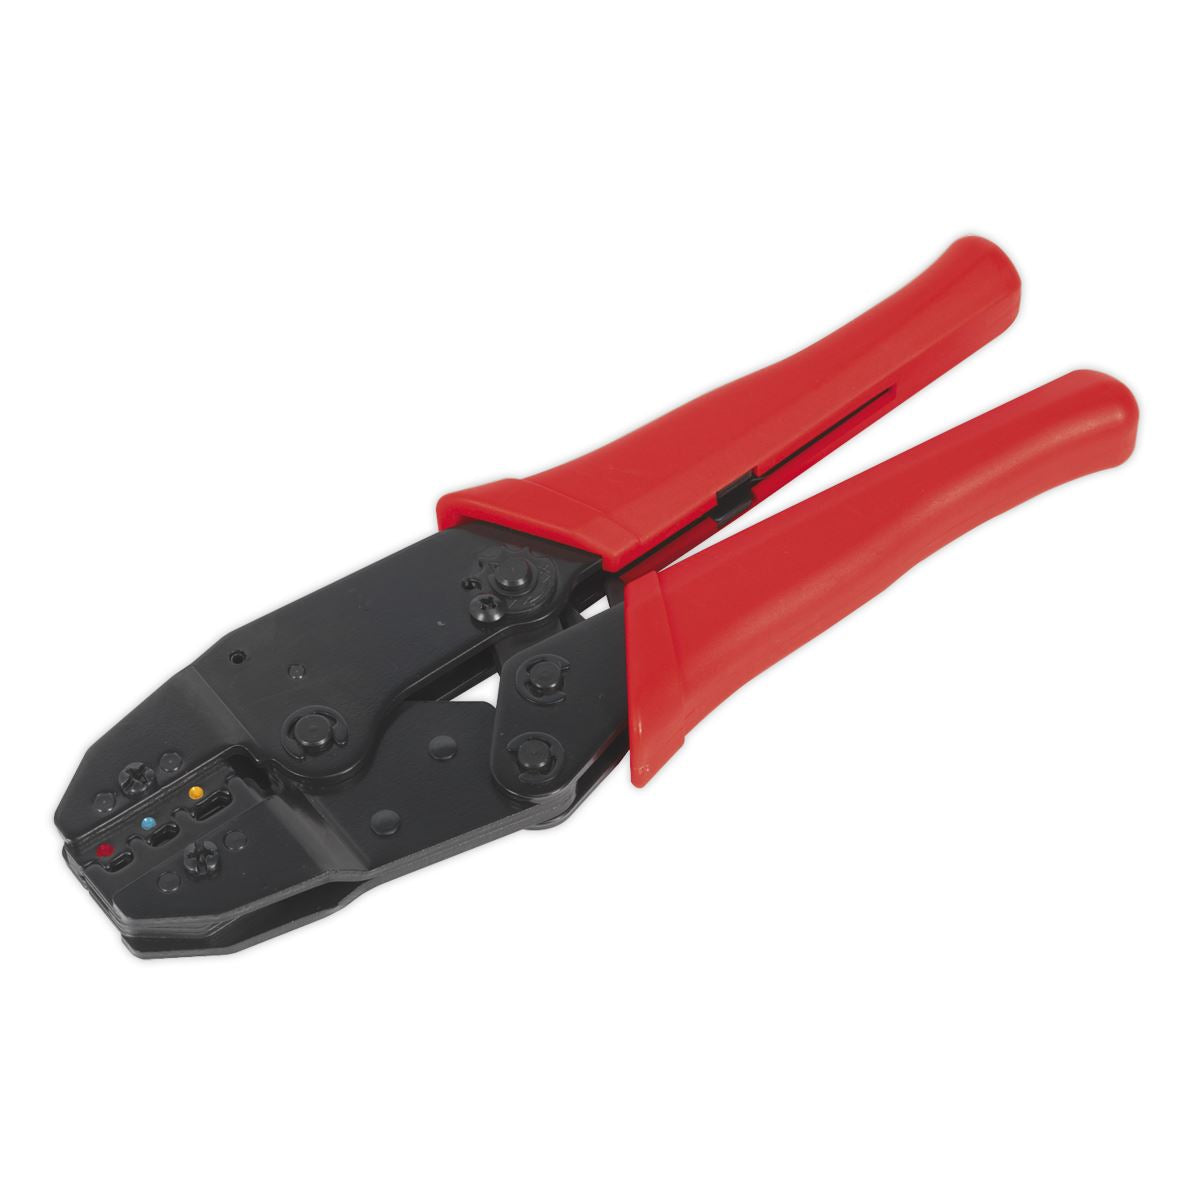 Sealey Ratchet Crimping Tool Kit 552pc